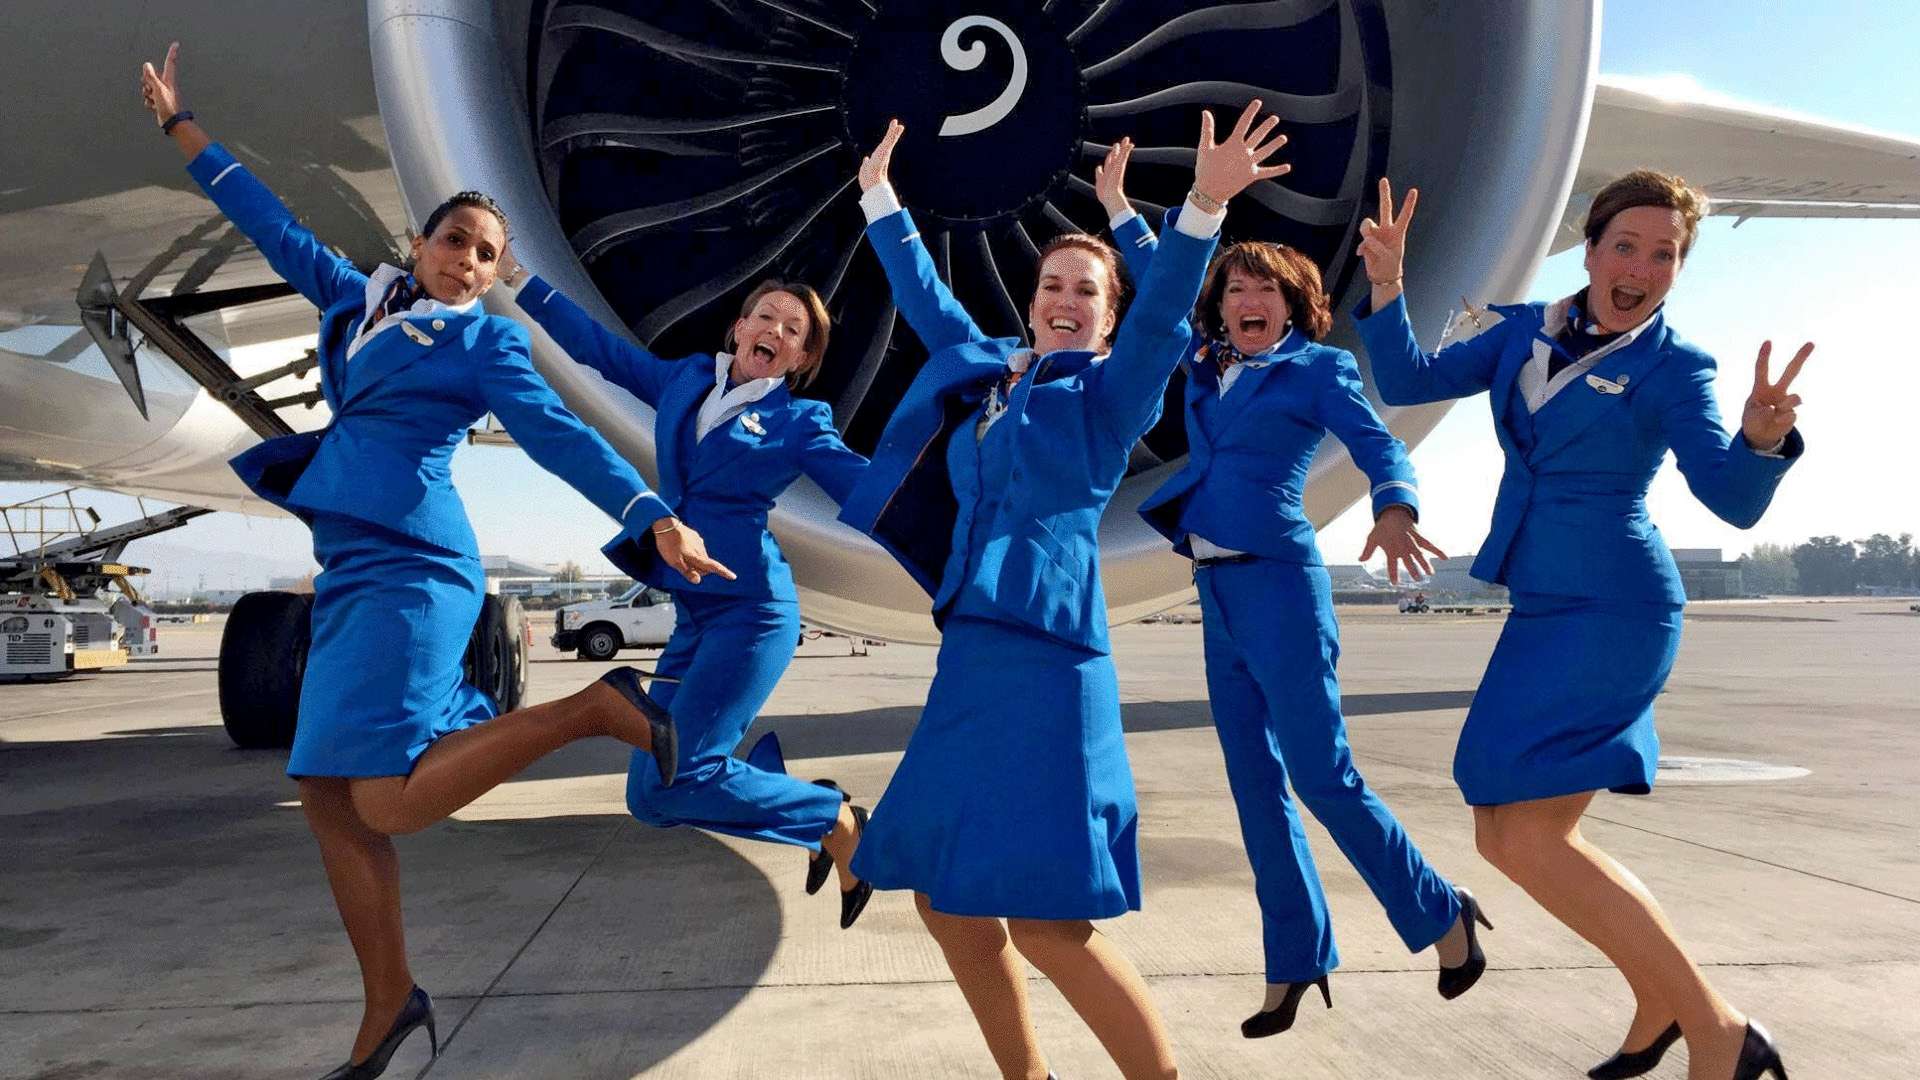 KLM crew uniforms